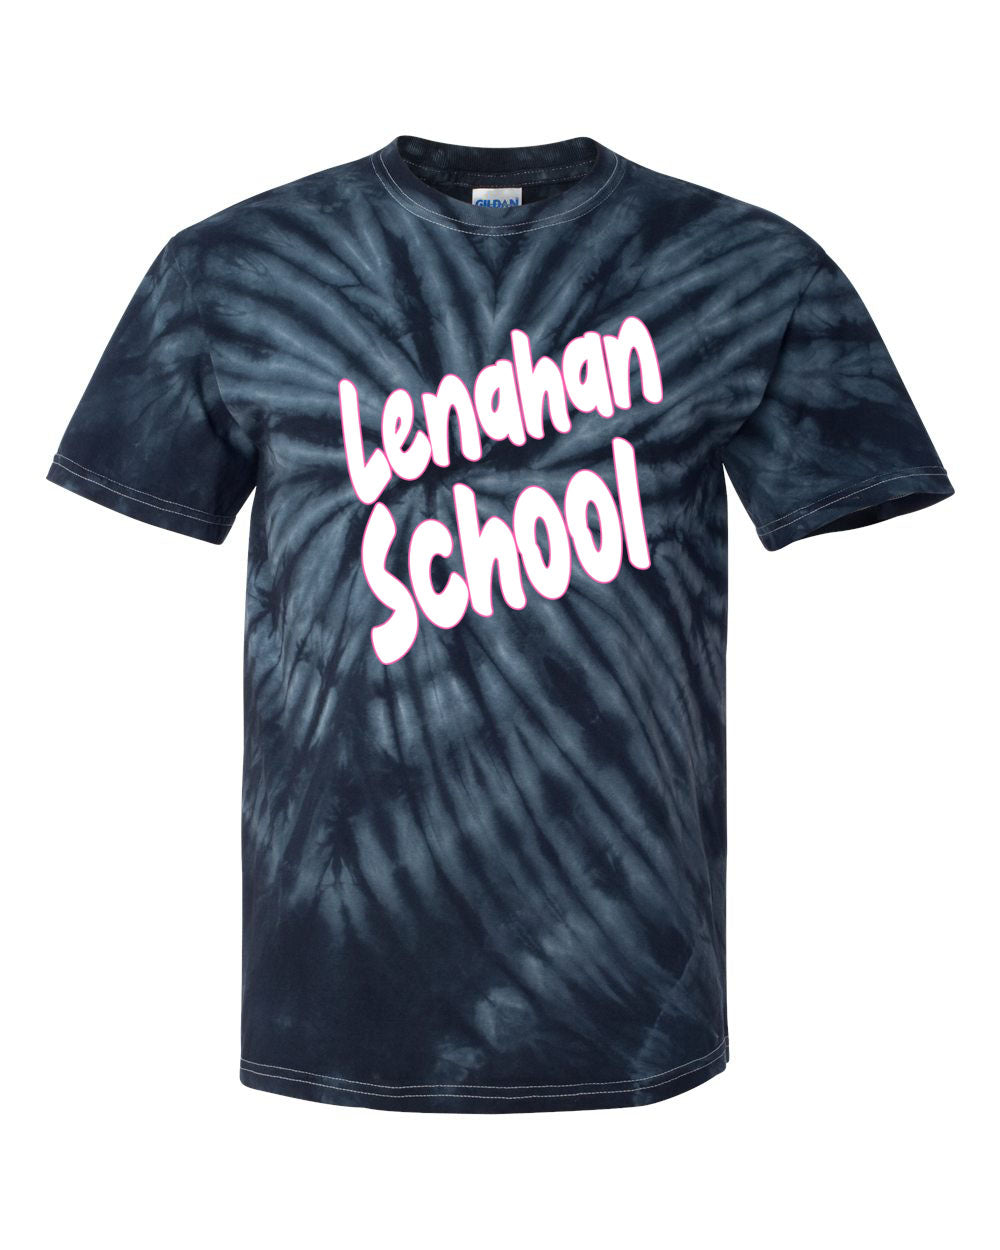 Lenahan Dance Design 5 Tie Dye t-shirt